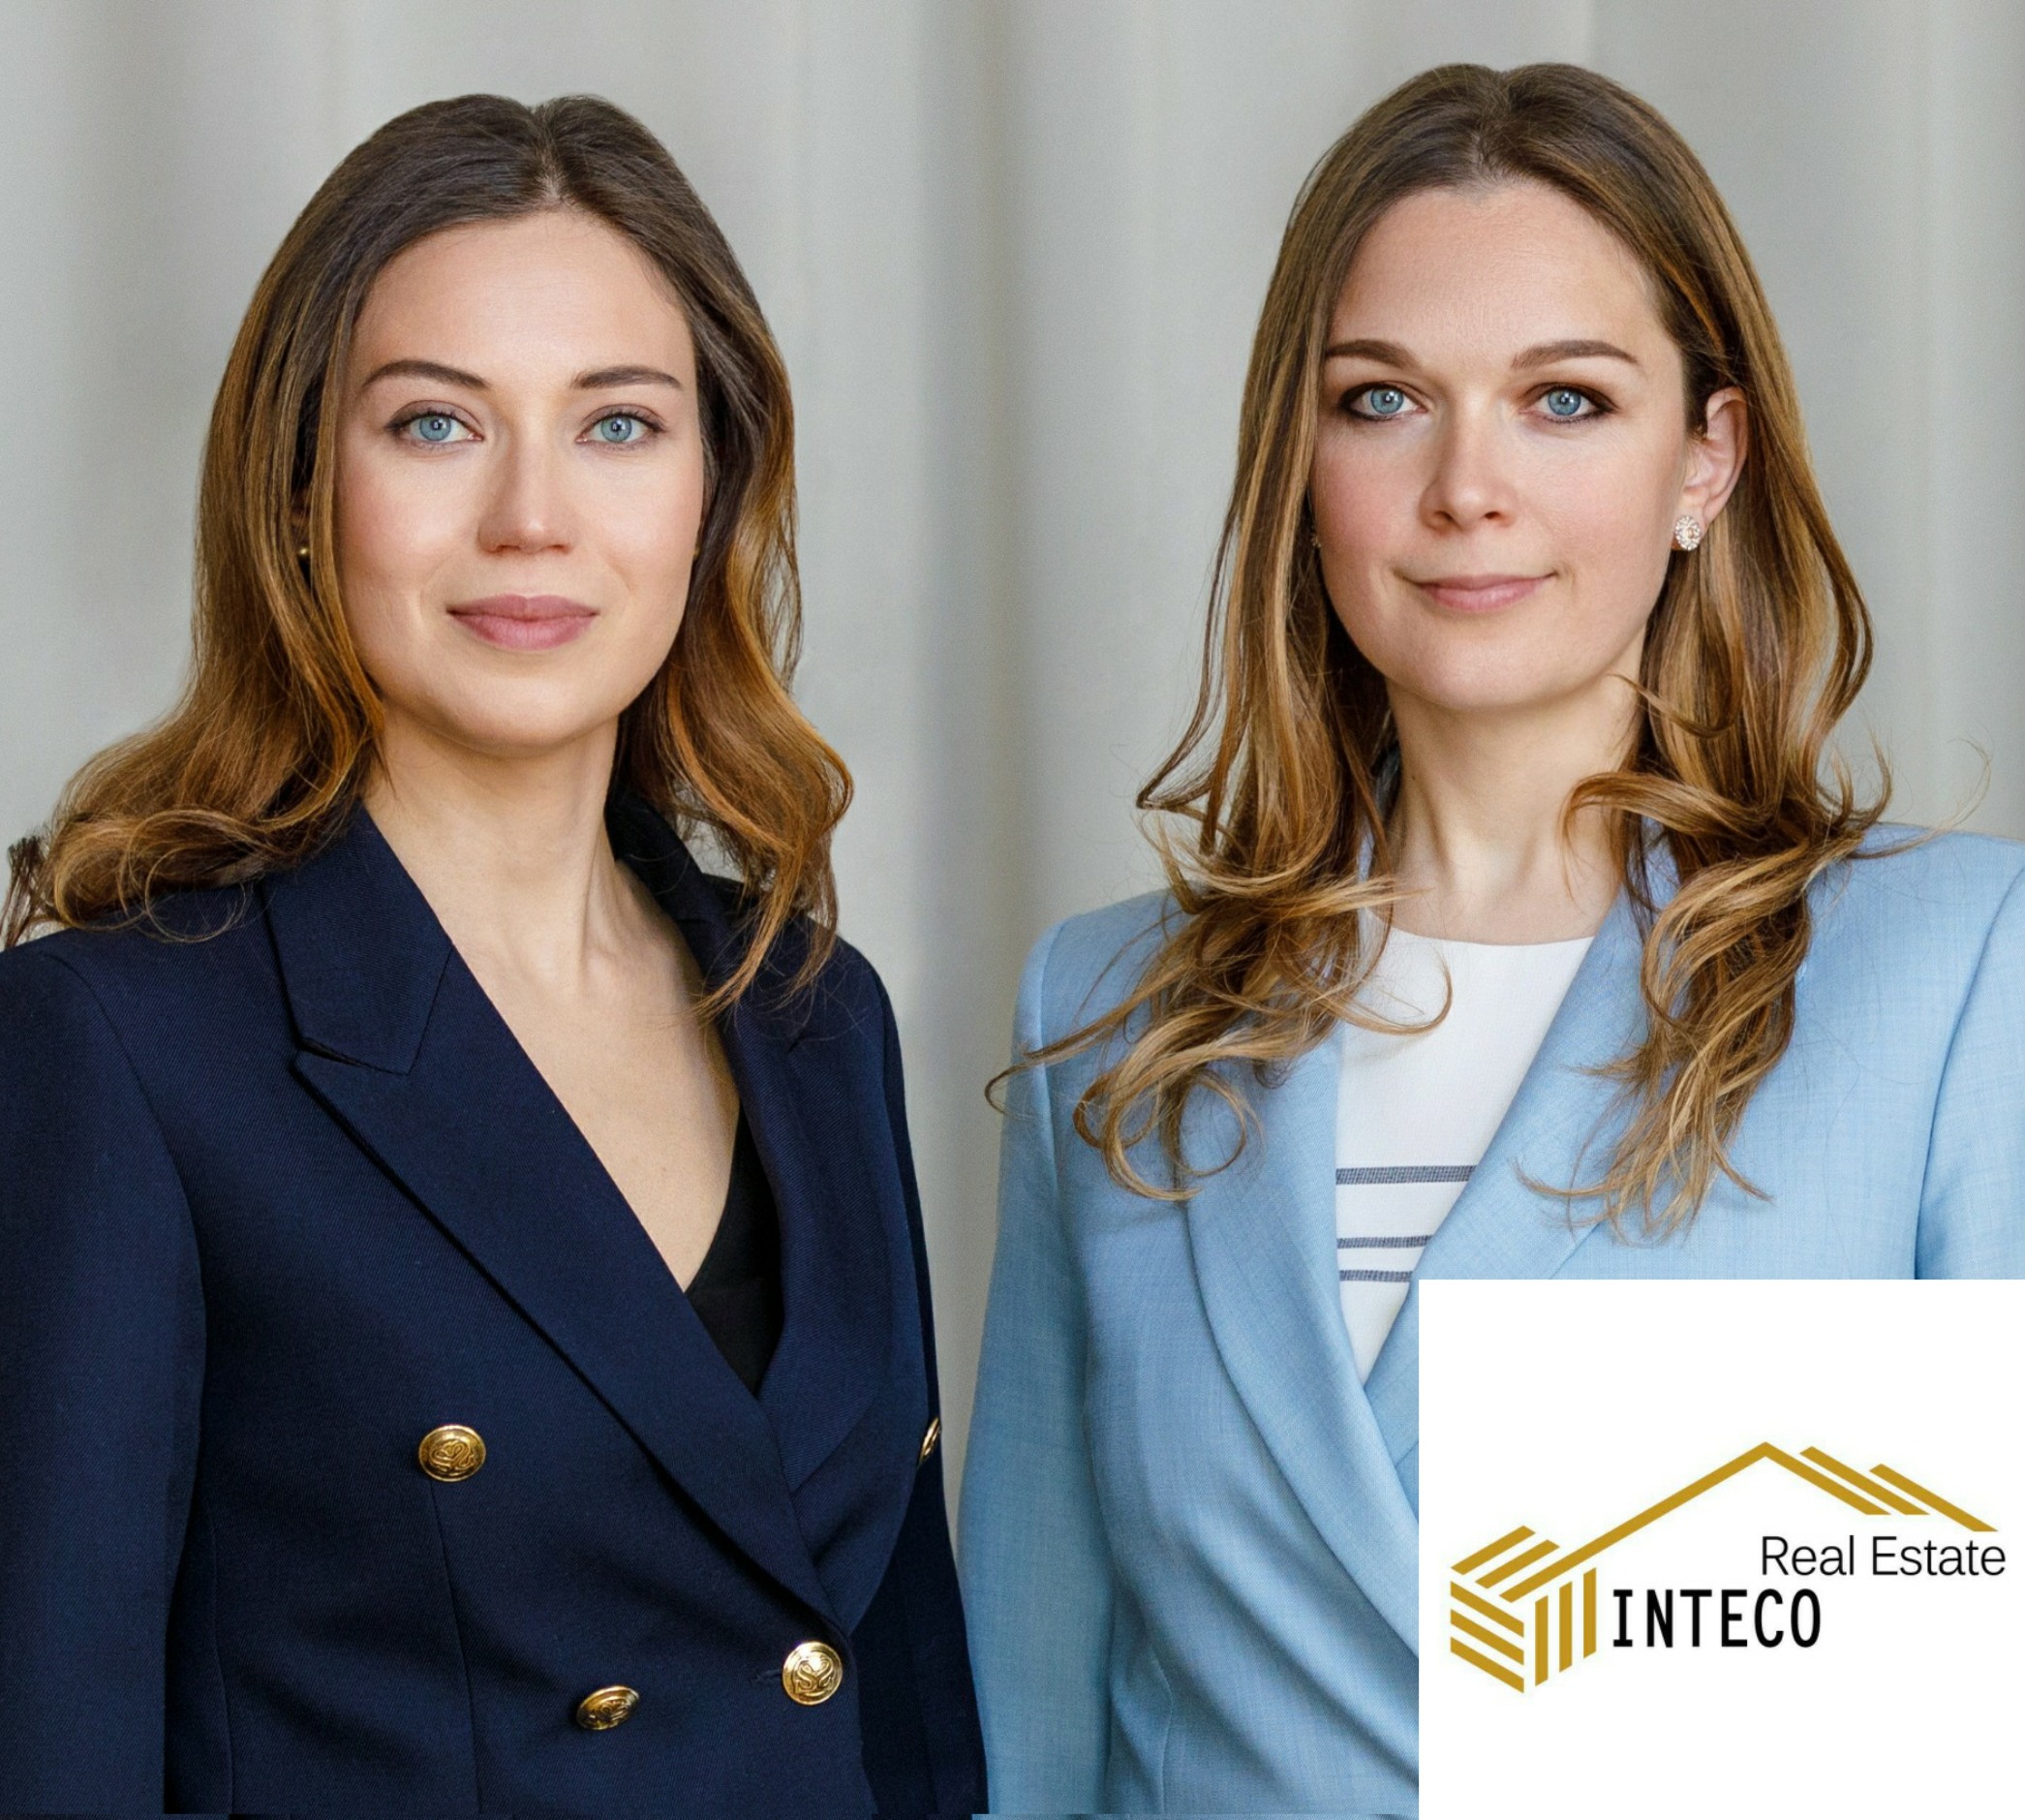 INTECO Real Estate - Ваше агентство недвижимости в Берлине